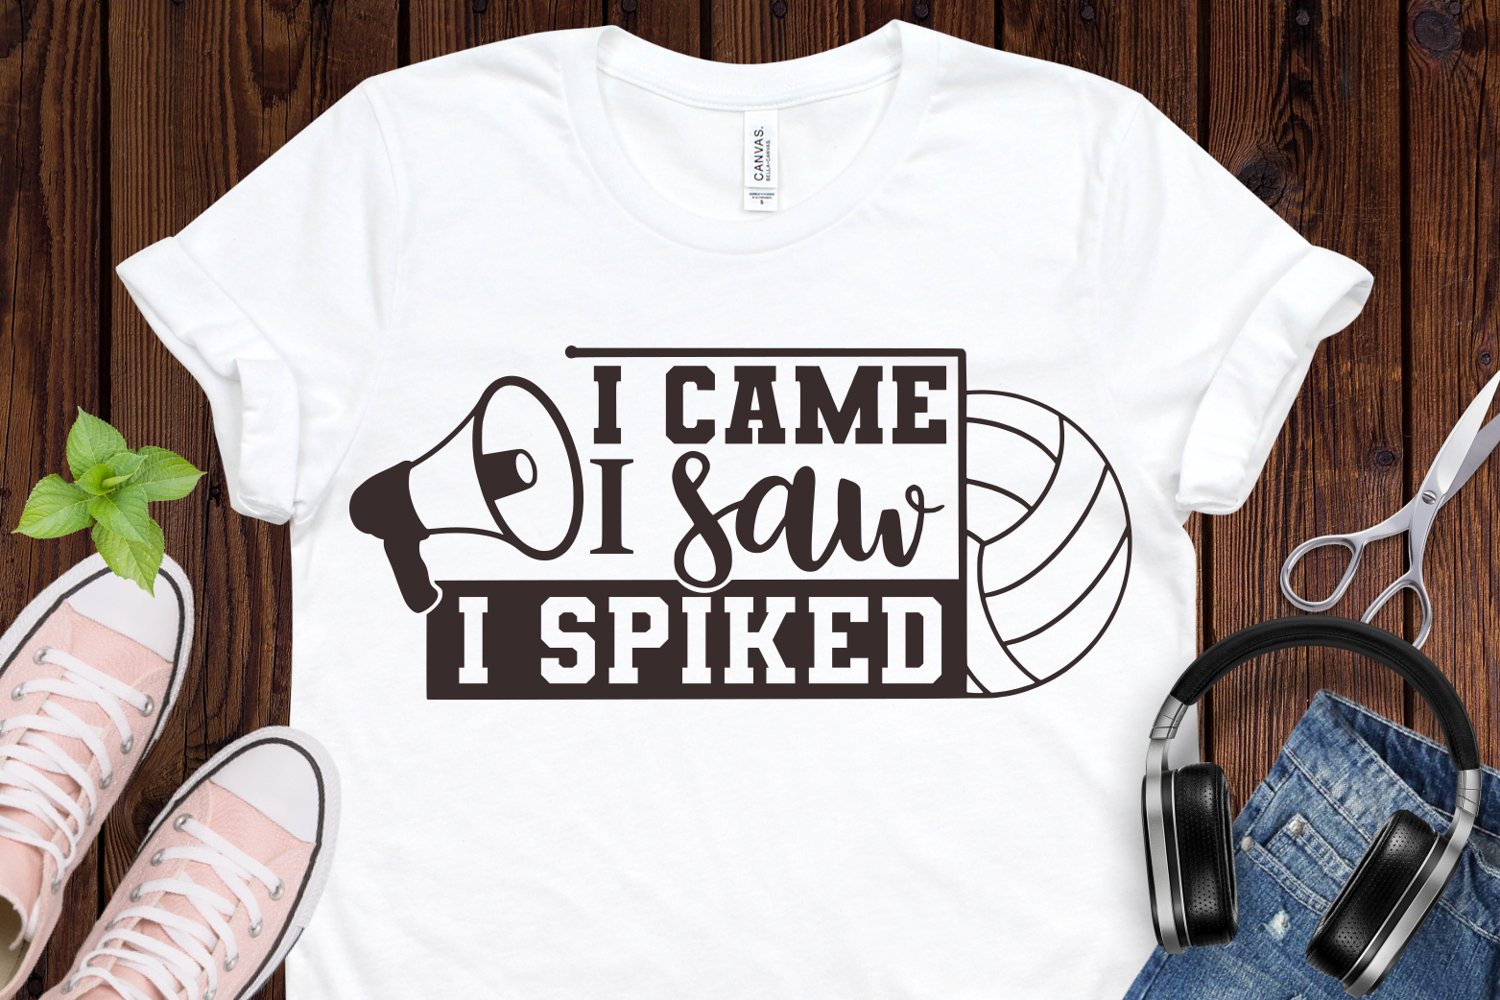 I came, I saw, I spiked - t-shirt design.